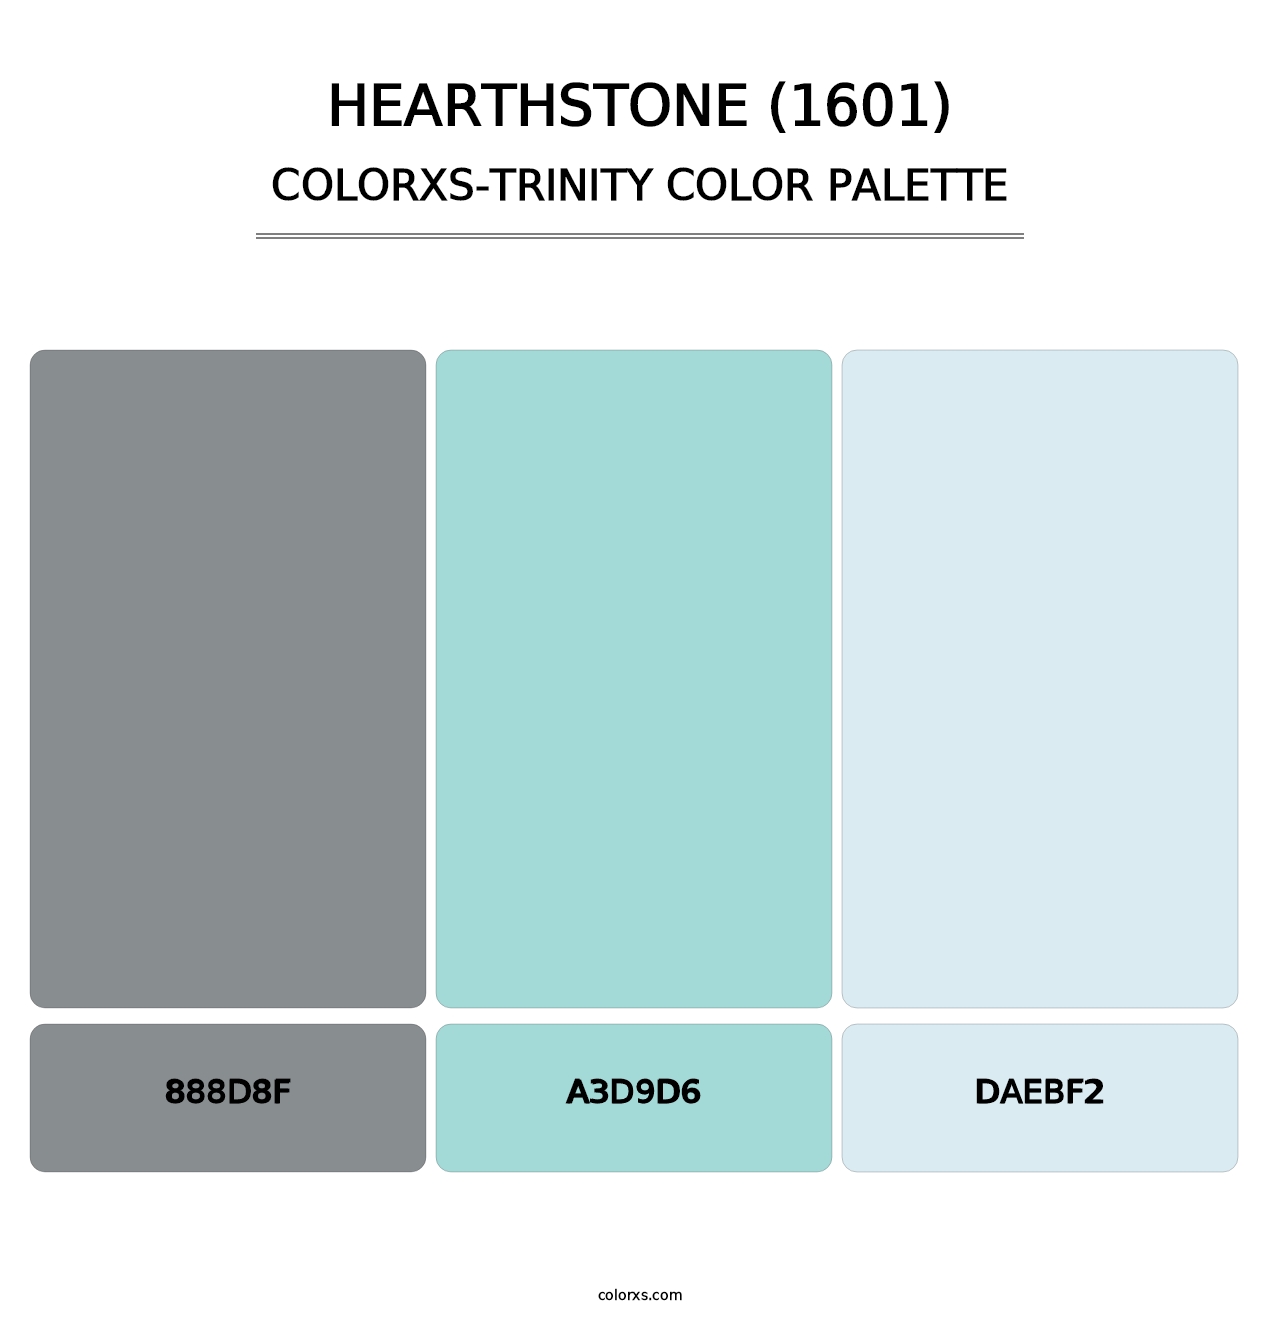 Hearthstone (1601) - Colorxs Trinity Palette